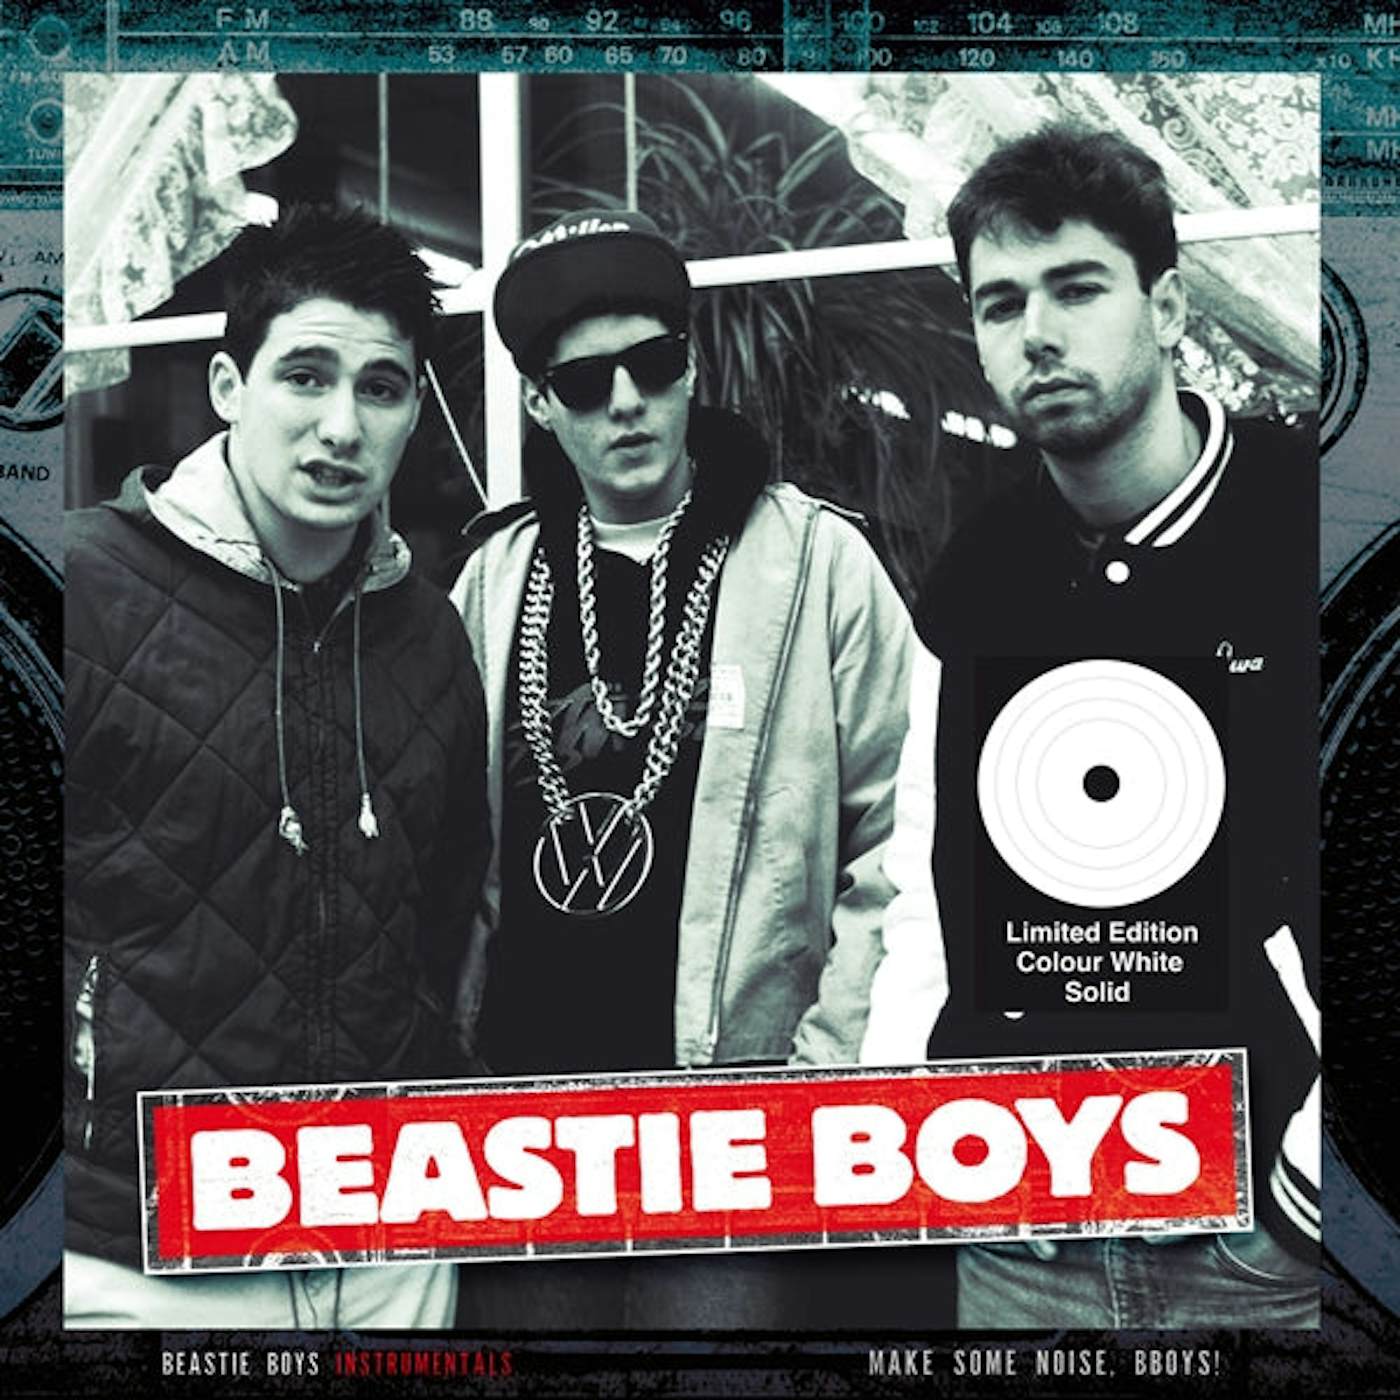 Beastie Boys LP - Make Some Noise, Bboys! - Instrumentals (White Vinyl)